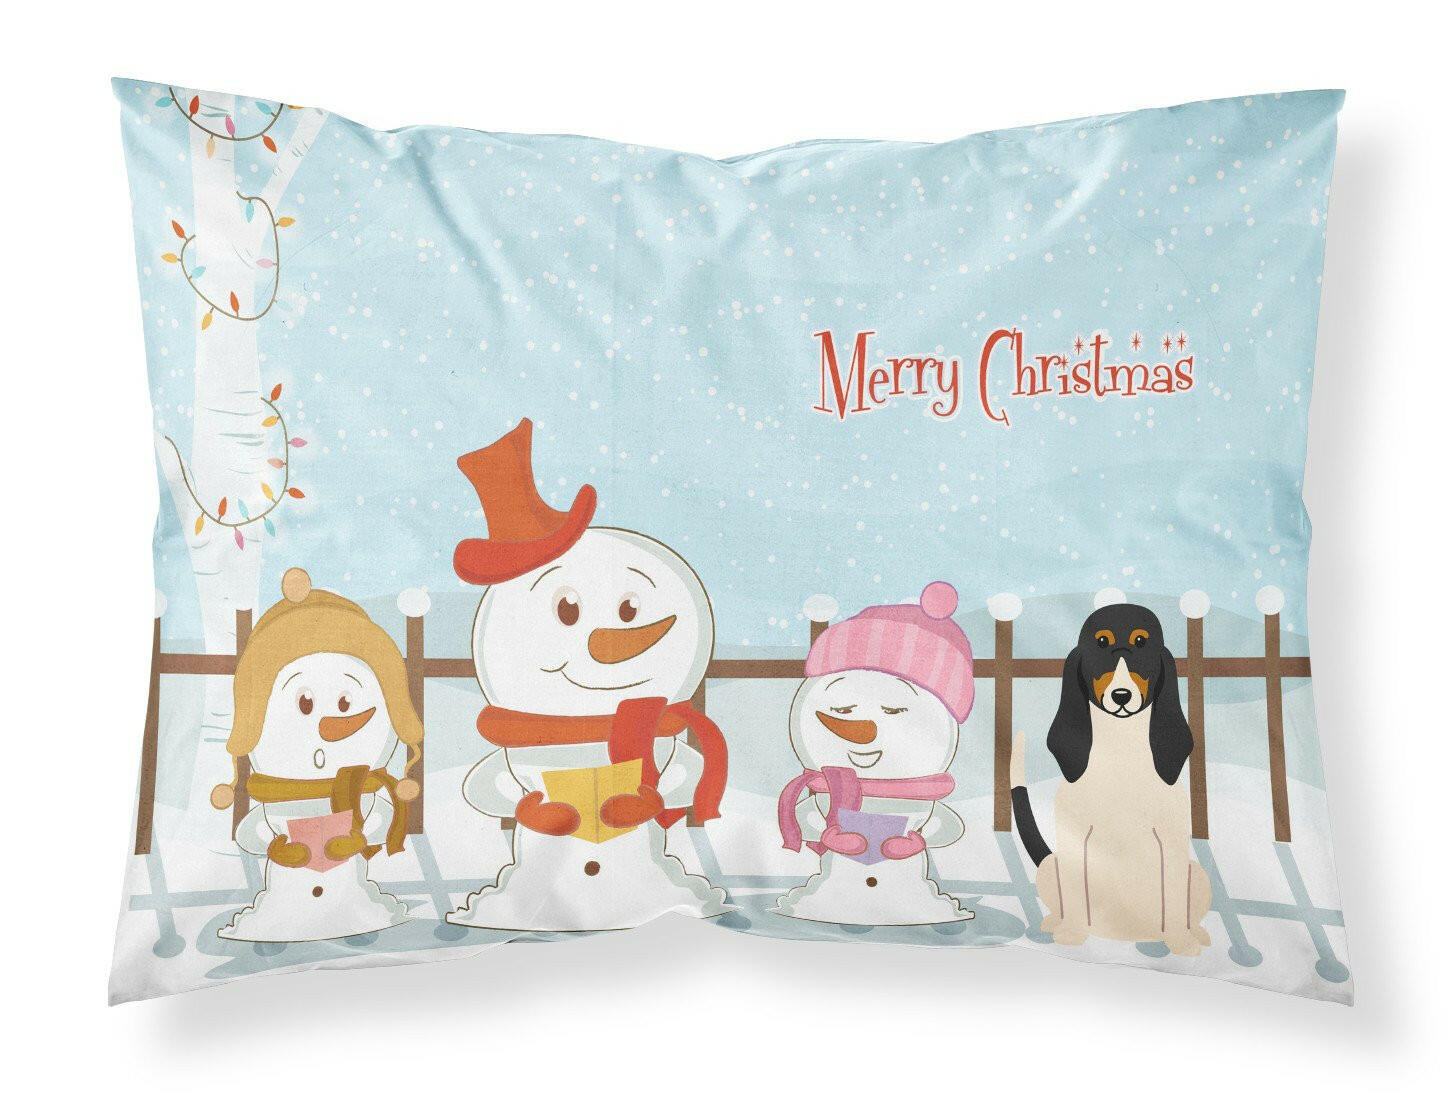 Merry Christmas Carolers Swiss Hound Fabric Standard Pillowcase BB2375PILLOWCASE by Caroline's Treasures